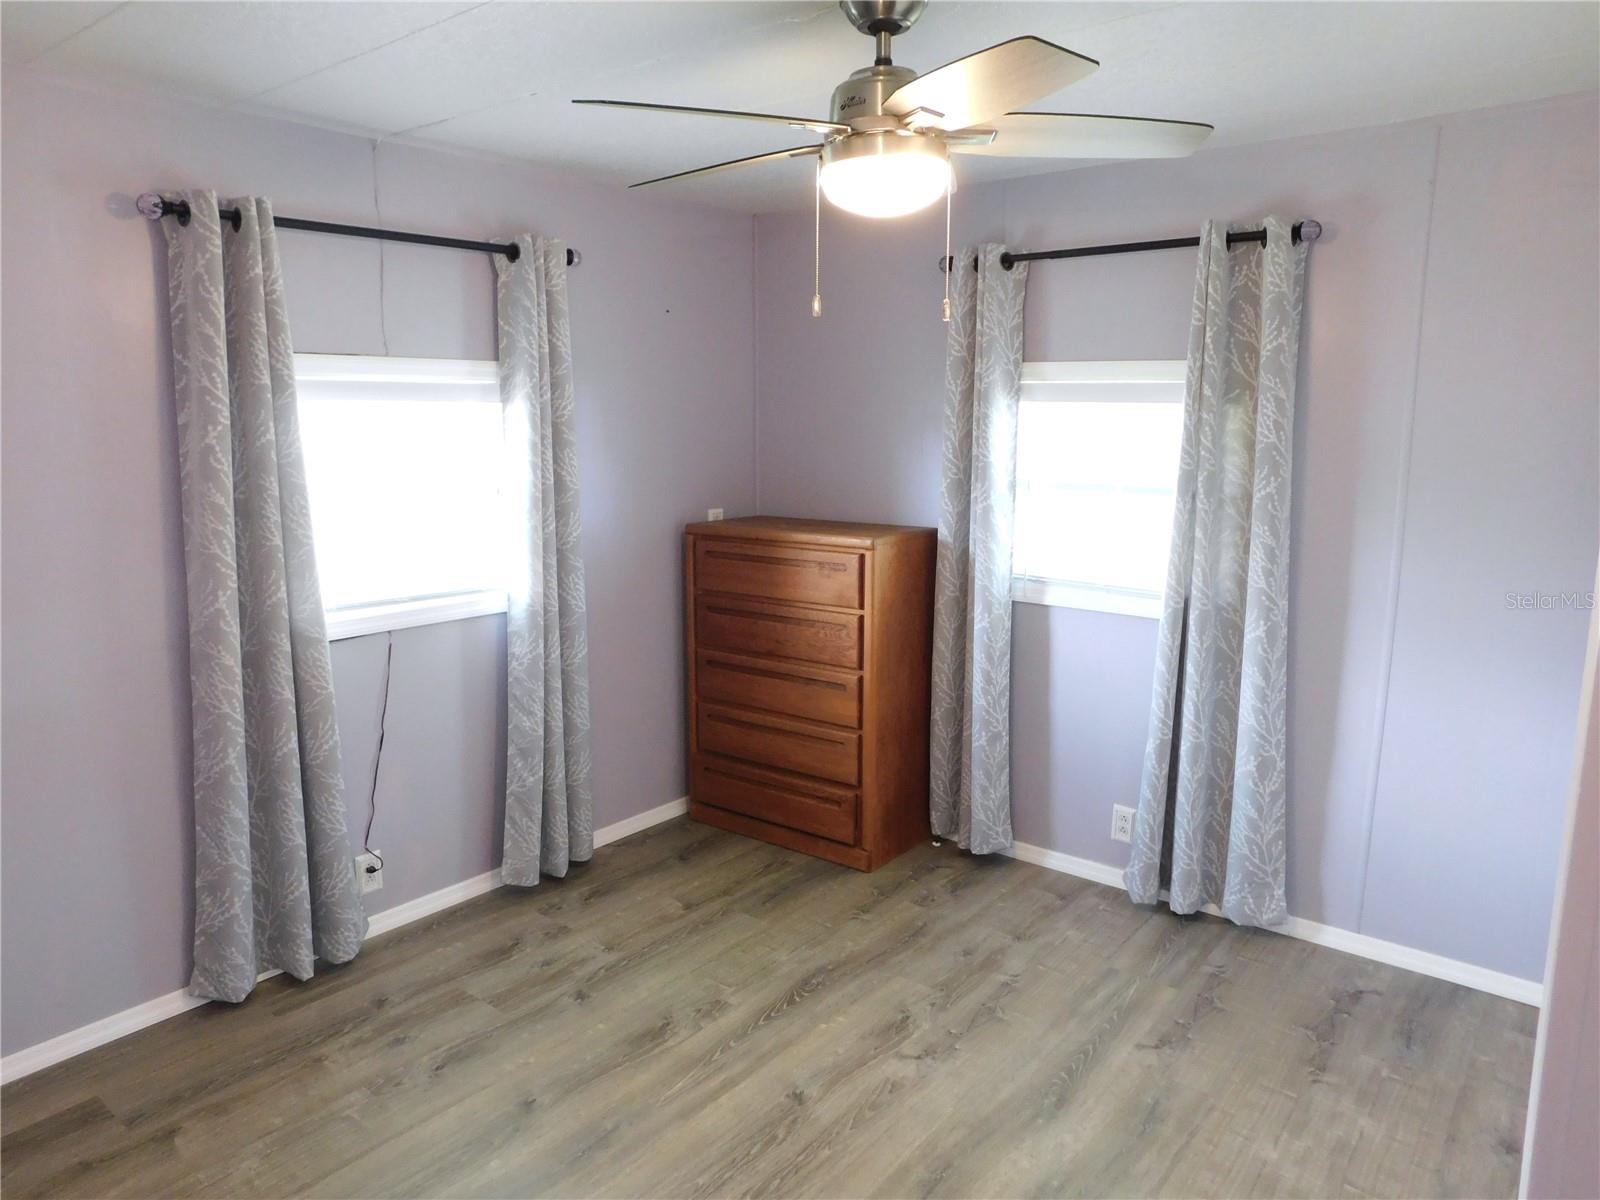 Main bedroom has ceiling fan, new flooring, fresh paint, and flooring.